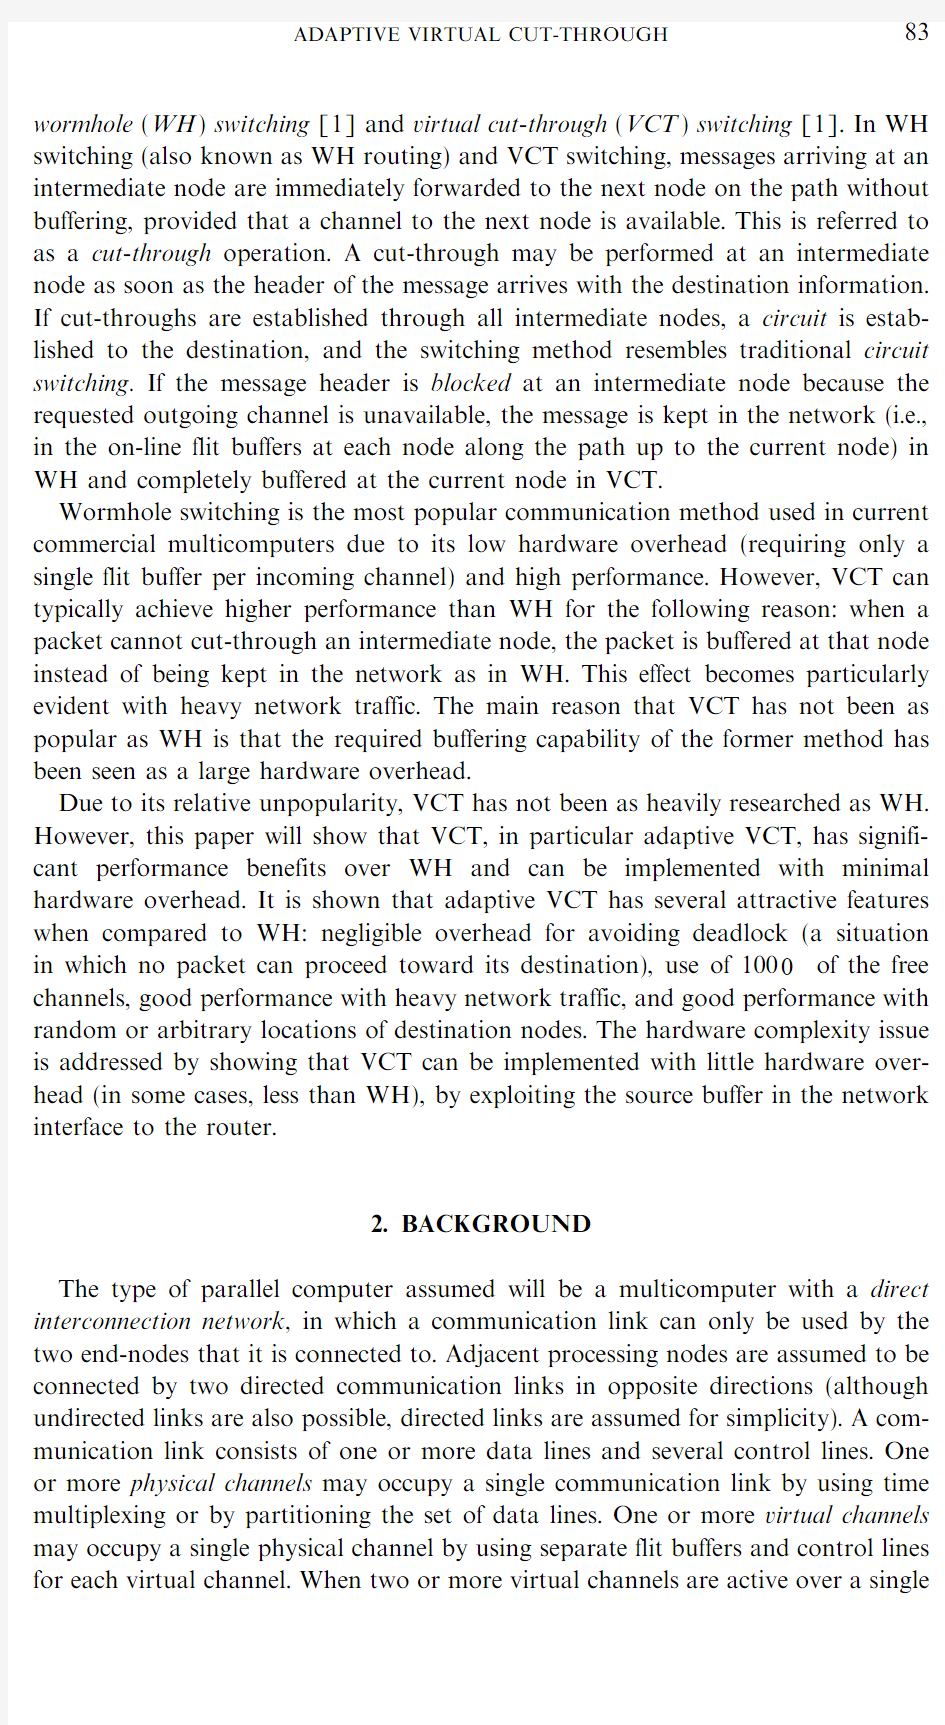 article no. PC981466 Adaptive Virtual Cut-Through as a Viable Routing Method 1